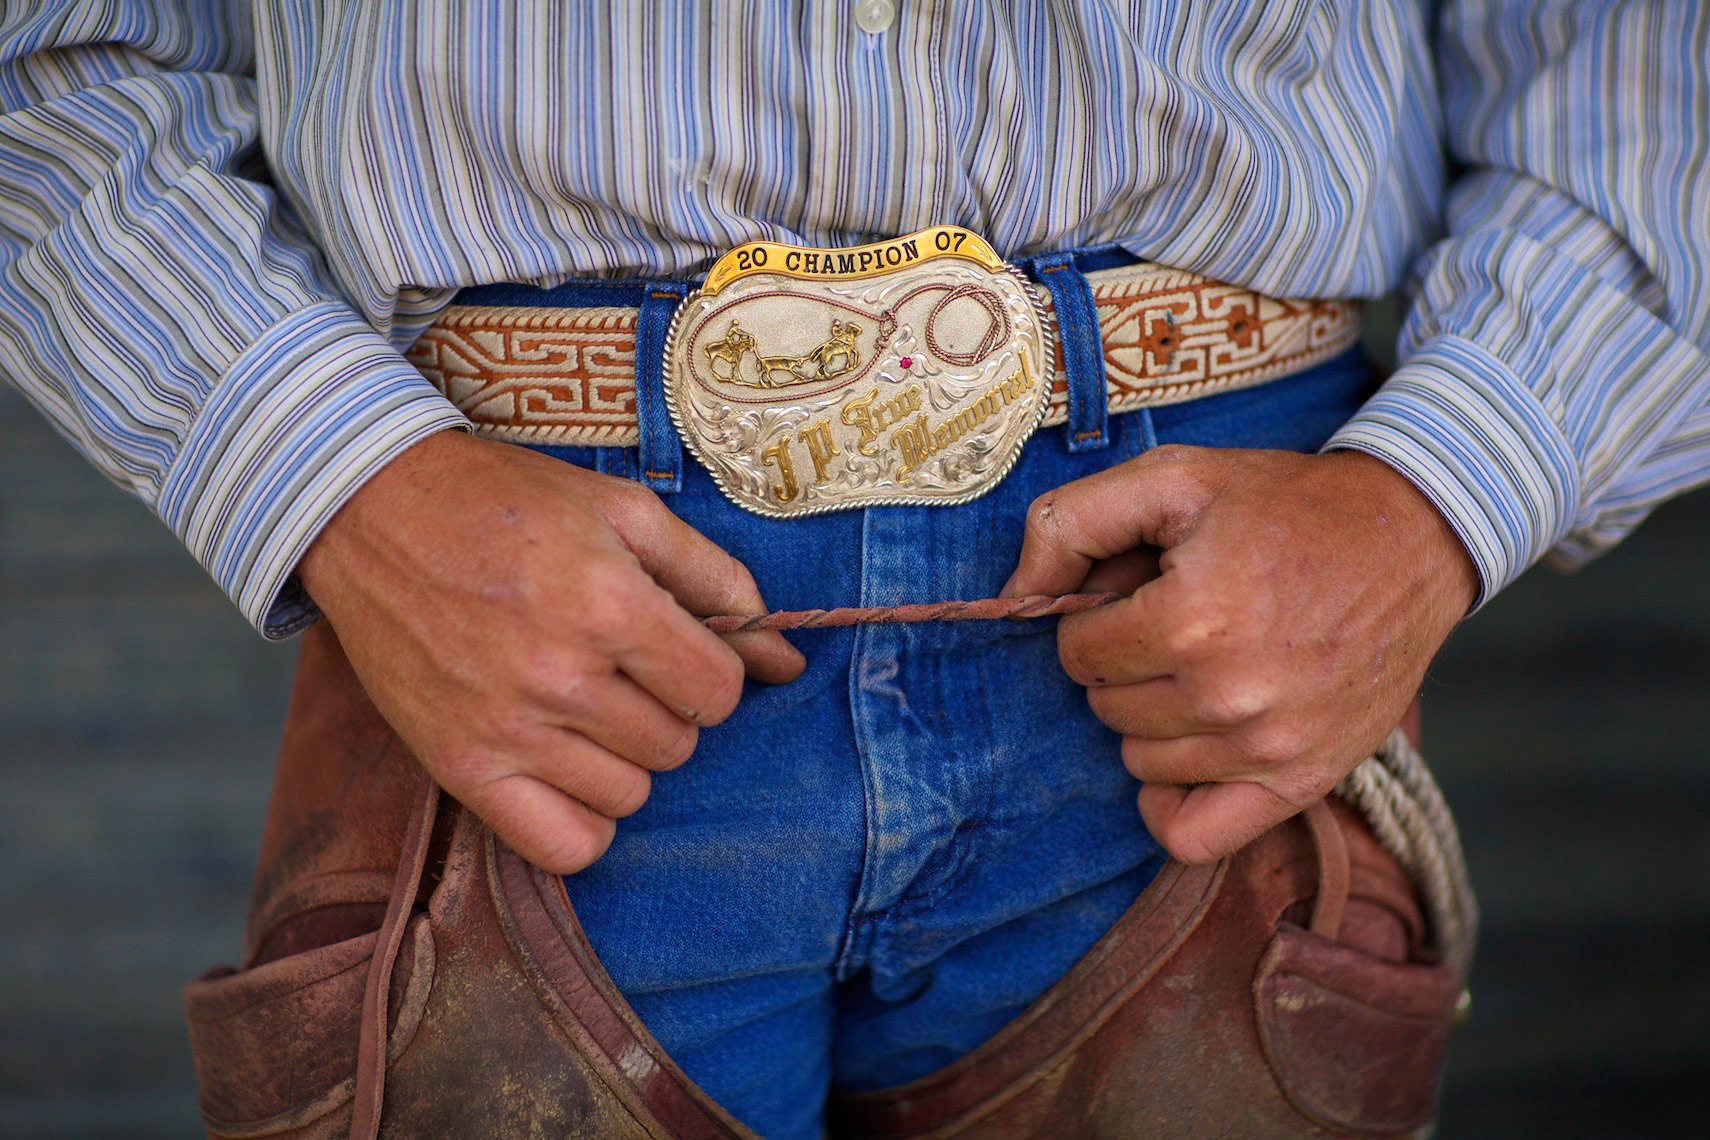 Rodeo Champion, Gunnison, CO